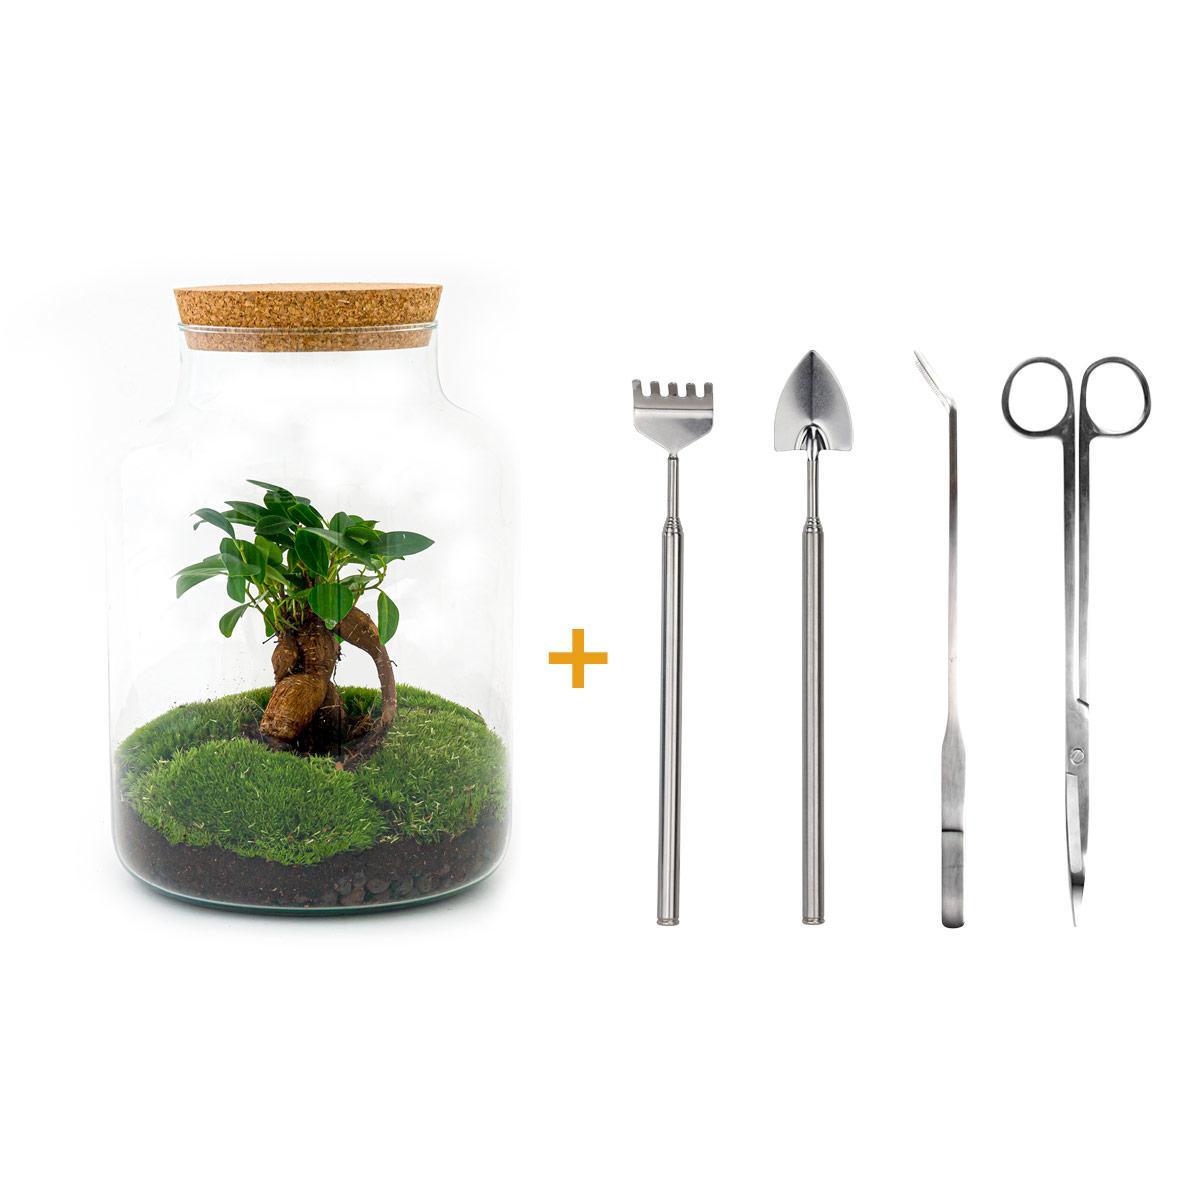 DIY terrarium - Milky met bonsai - ↑ 30 cm + Rake + Shovel + Tweezer + Scissors